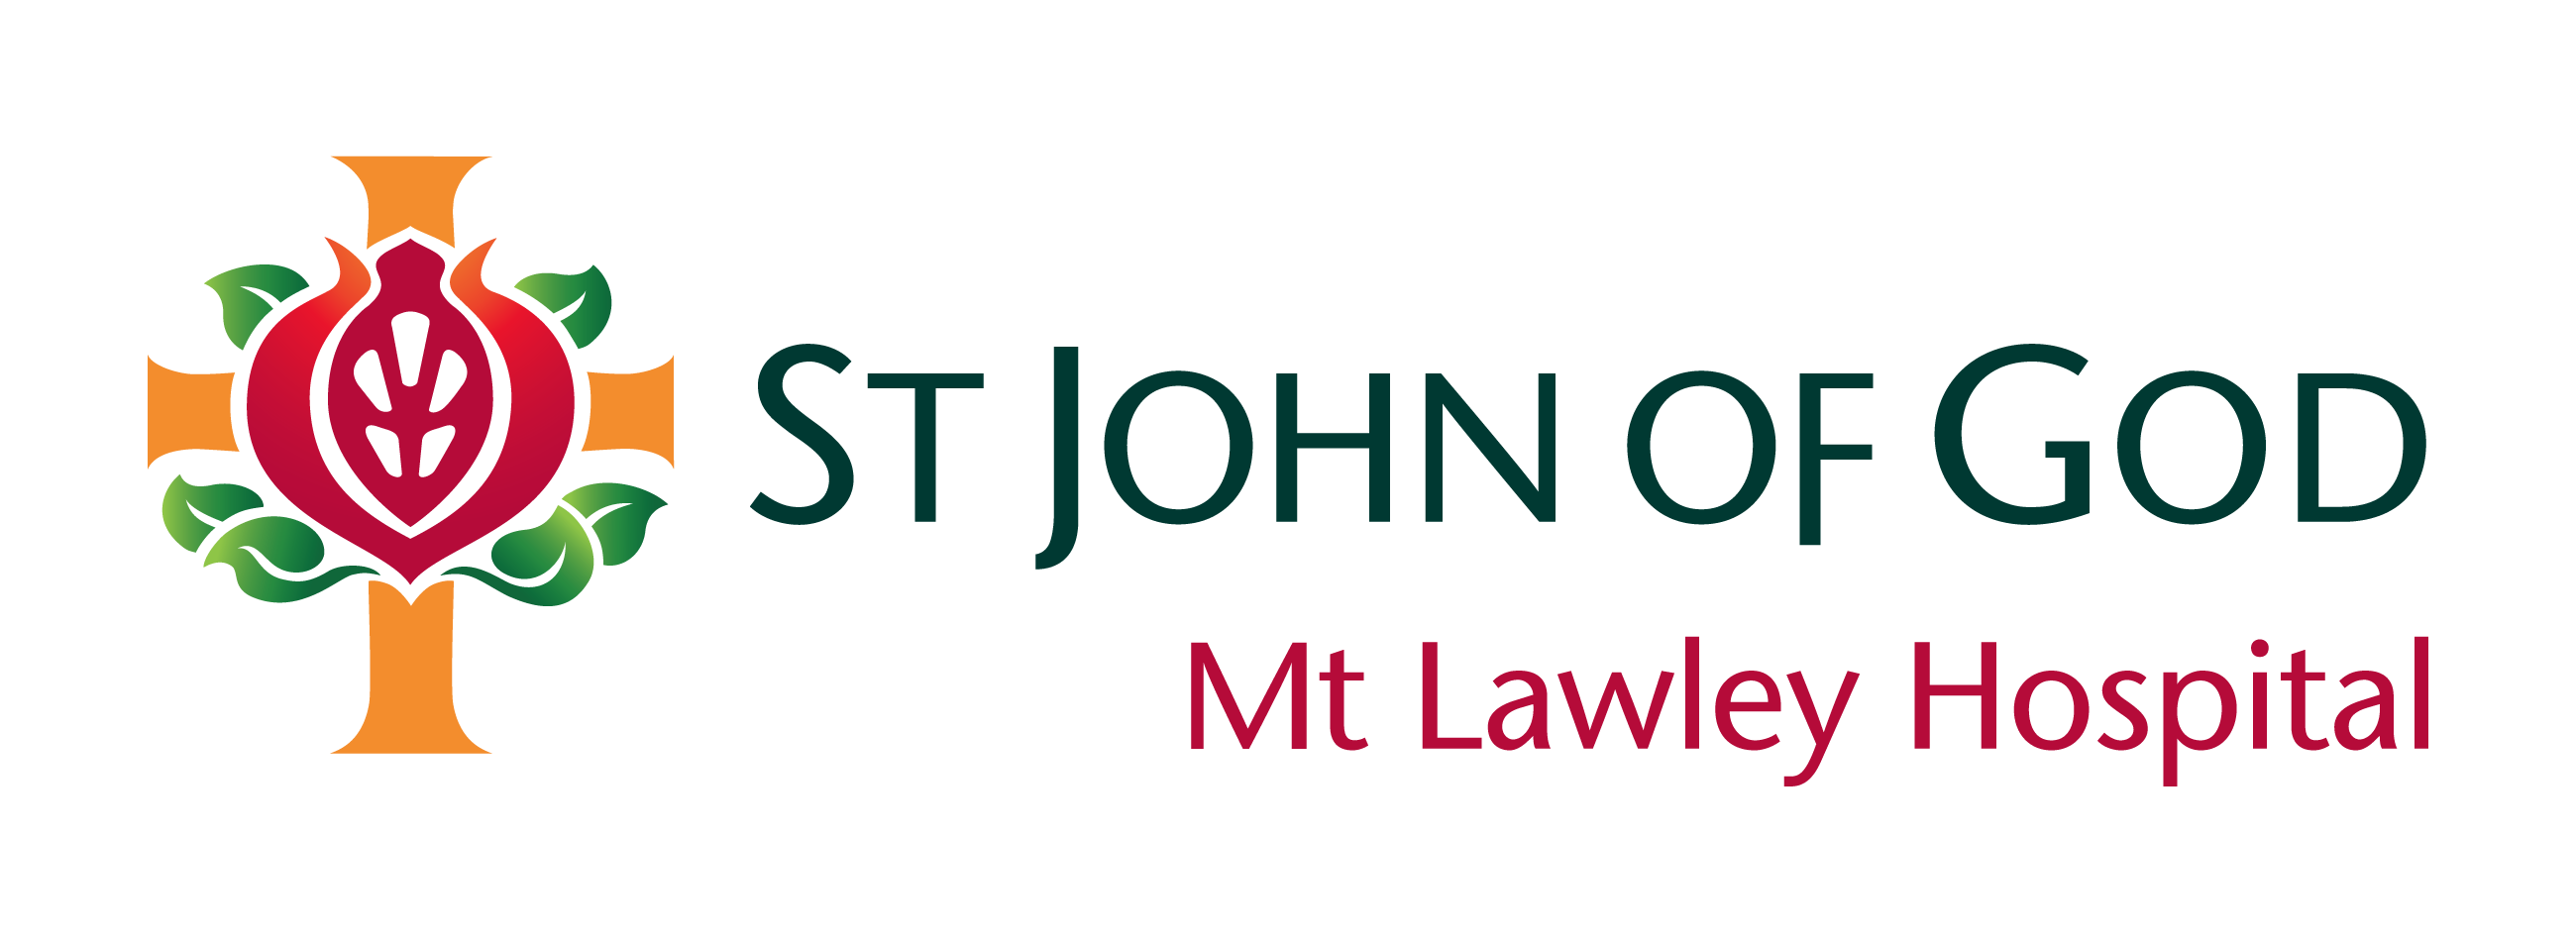 St John of God Mt Lawley Logo